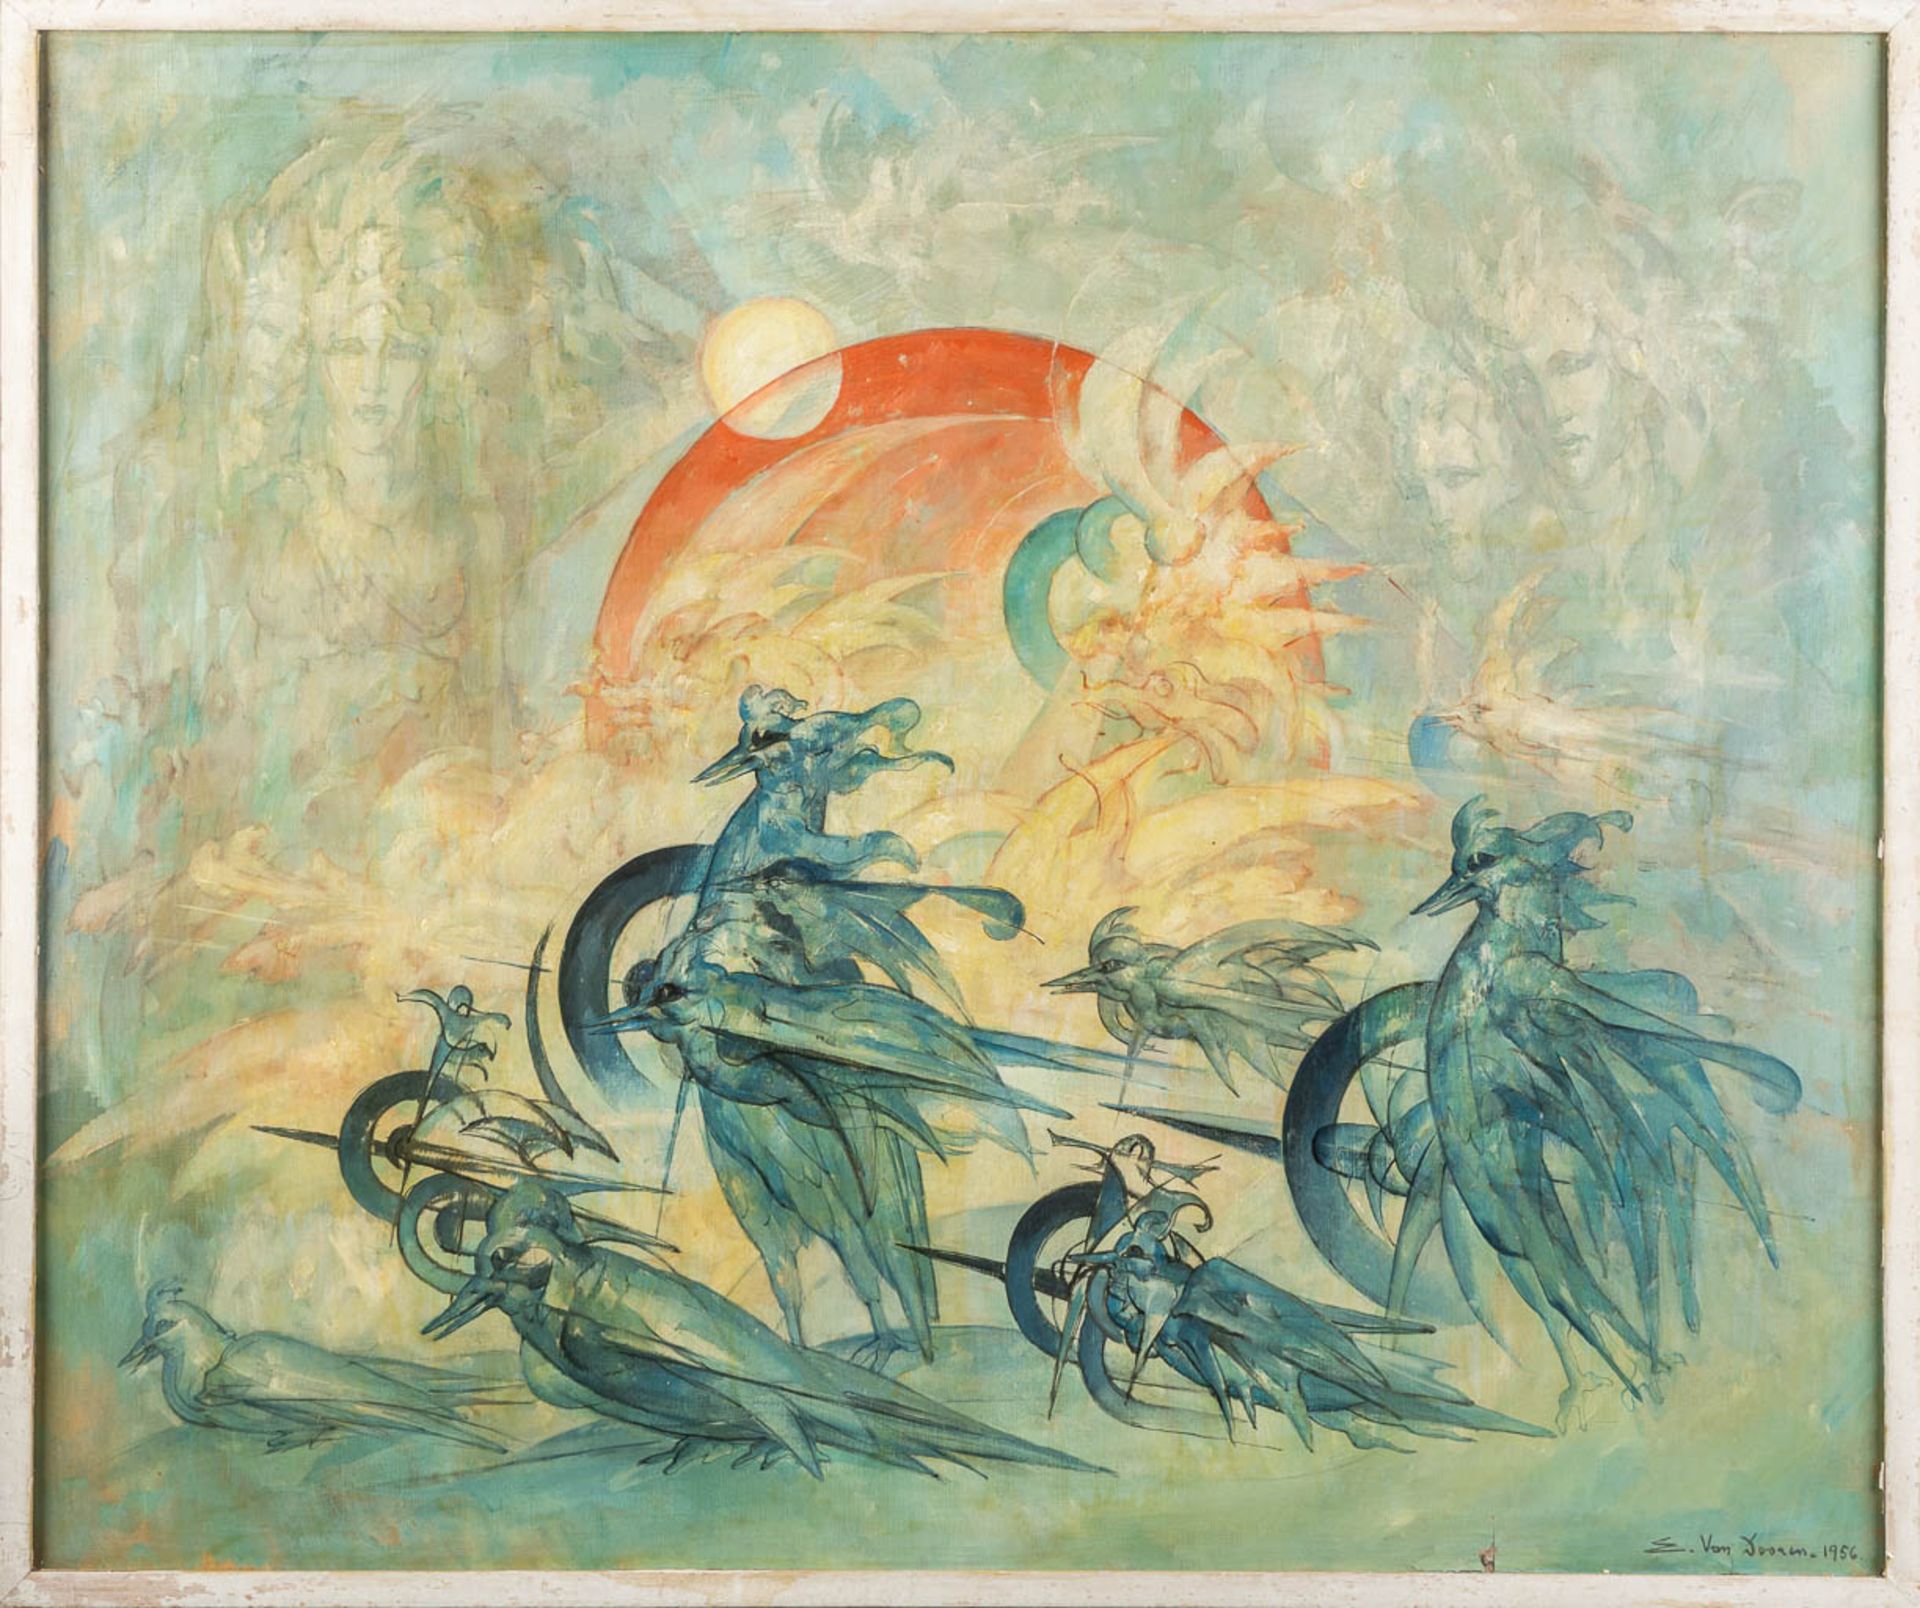 Edmond VAN DOOREN (1896-1965) 'Futuristic composition' oil on canvas. 1956. (W:120 x H:100 cm) - Image 3 of 11